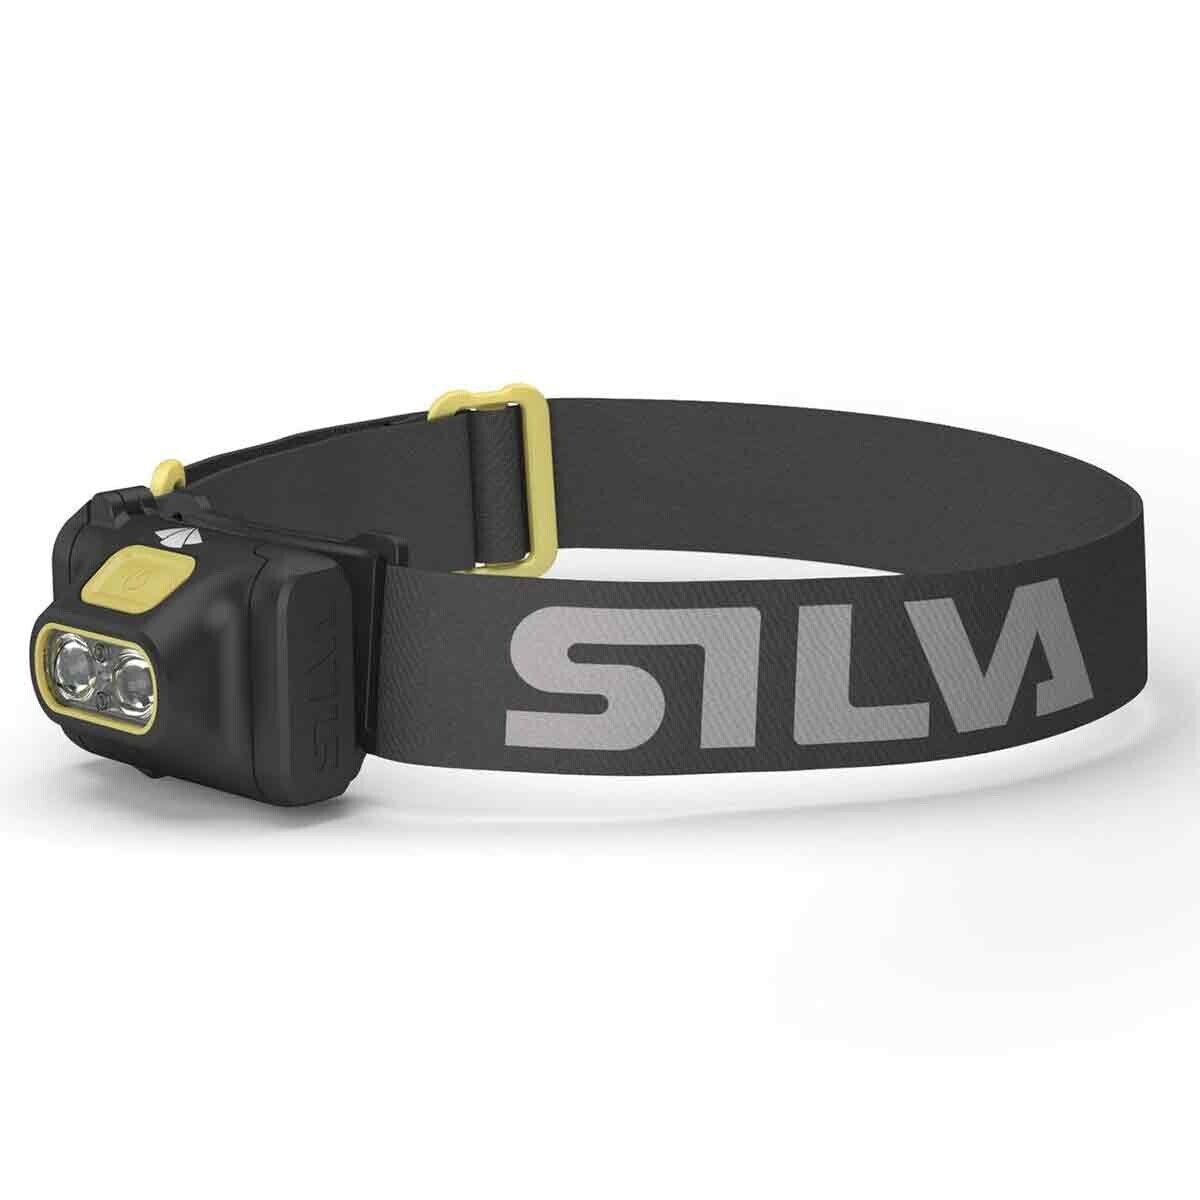 Silva Scout 3 Outdoor Head Torch - Walking, Hiking, Running